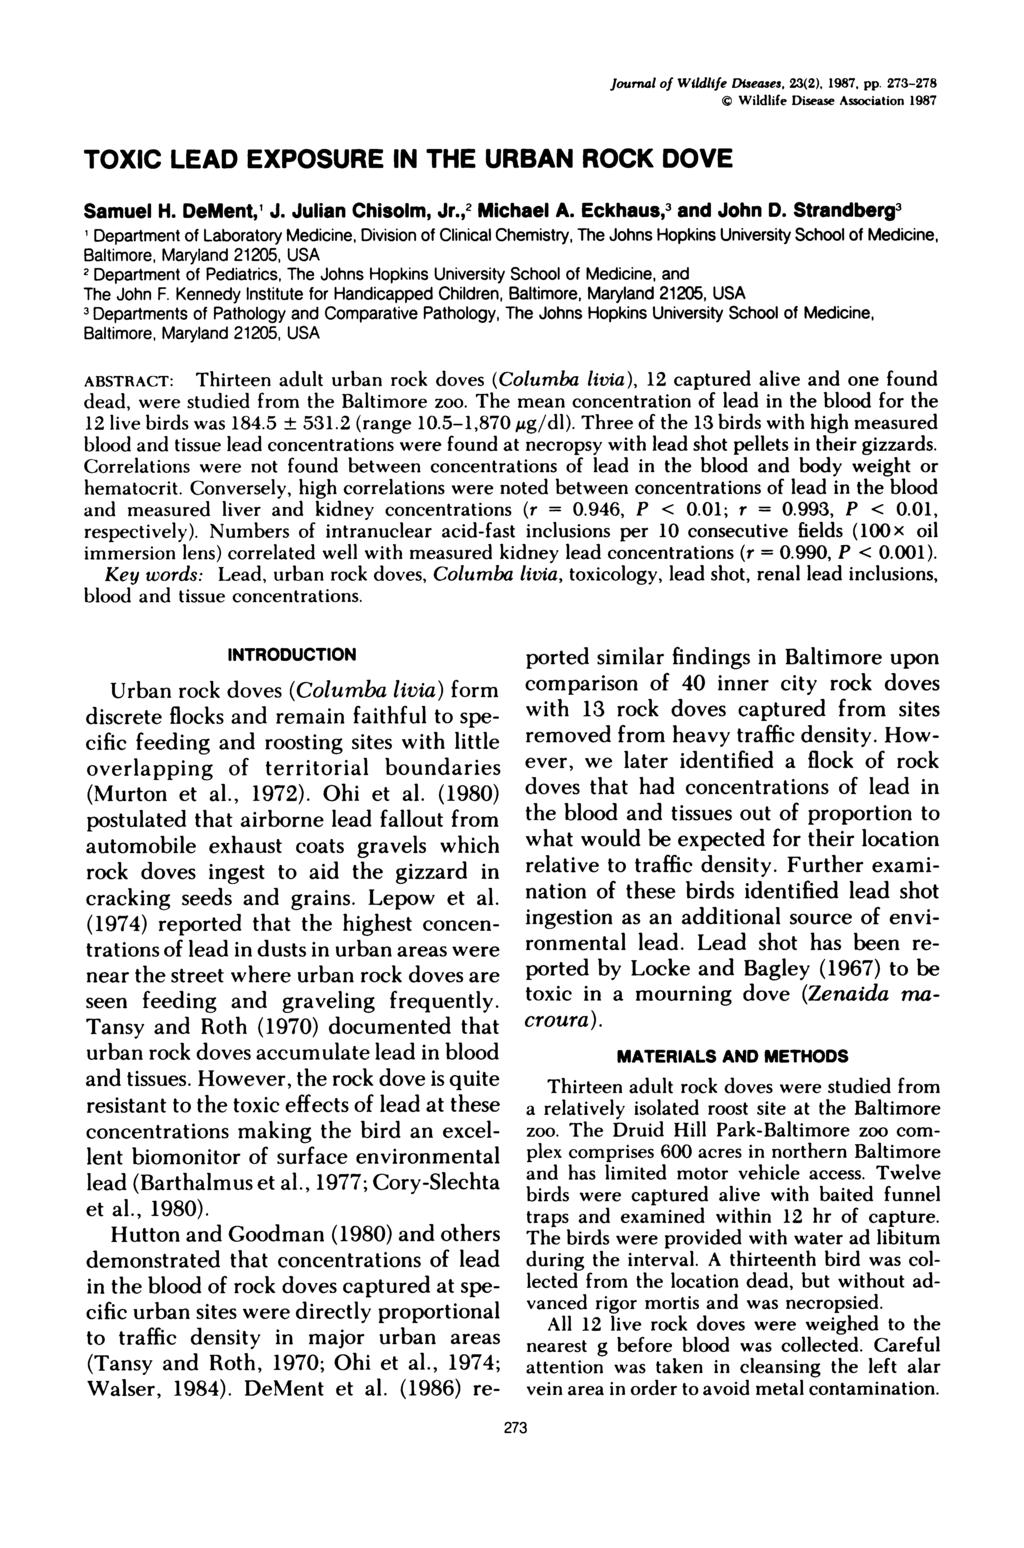 Journal of Wildlife DIseases, 23(2), 1987, pp. 273-278 Wildlife Disease Association 1987 TOXIC LEAD EXPOSURE IN THE URBAN ROCK DOVE Samuel H. DeMent, J. Julian Chisolm, Jr.,2 Michael A.